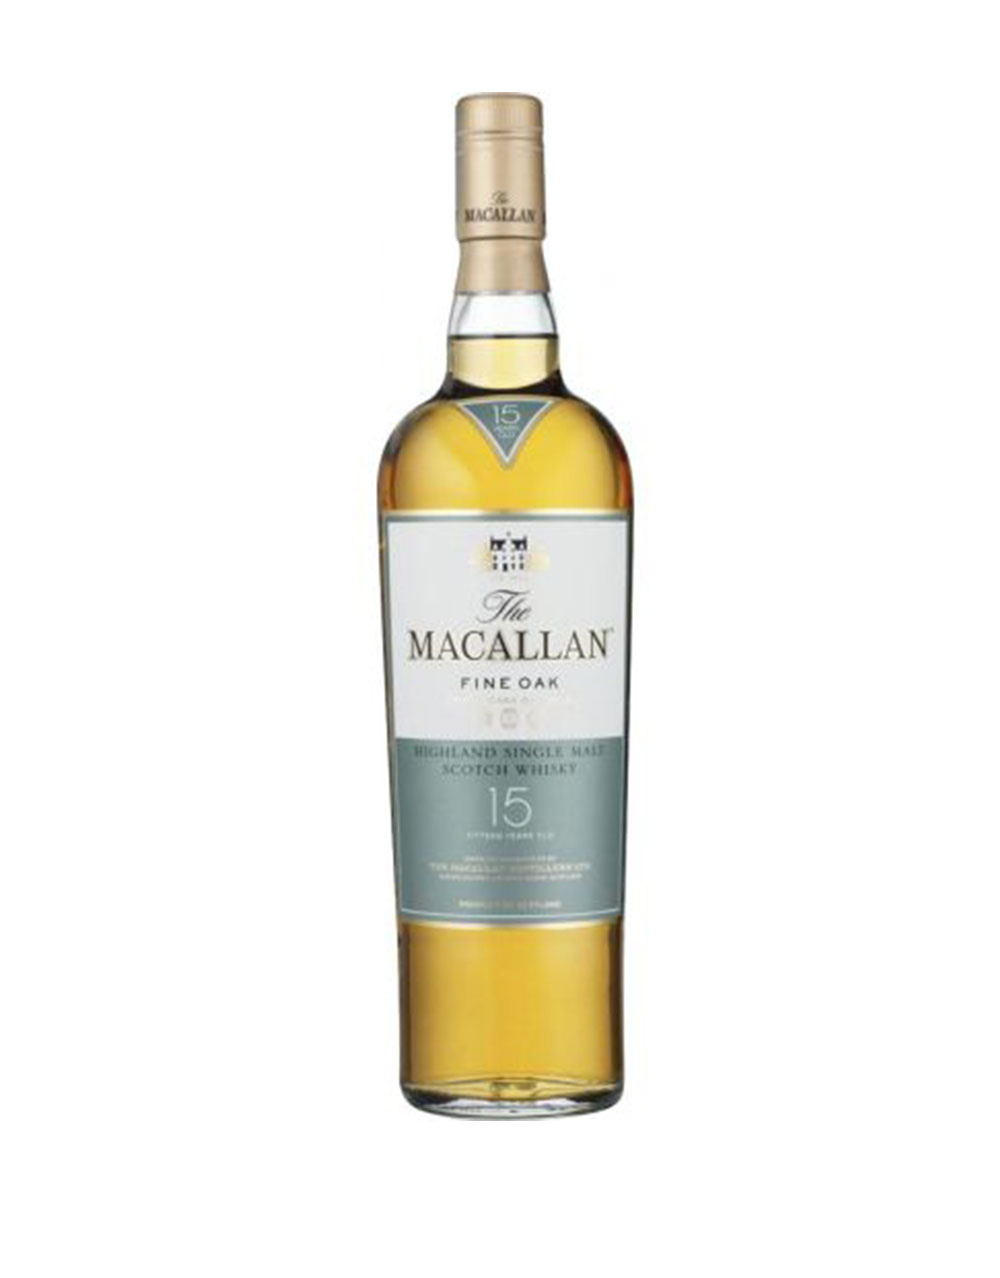 The Macallan 10 Year Old Fine Oak Scotch Single Malt